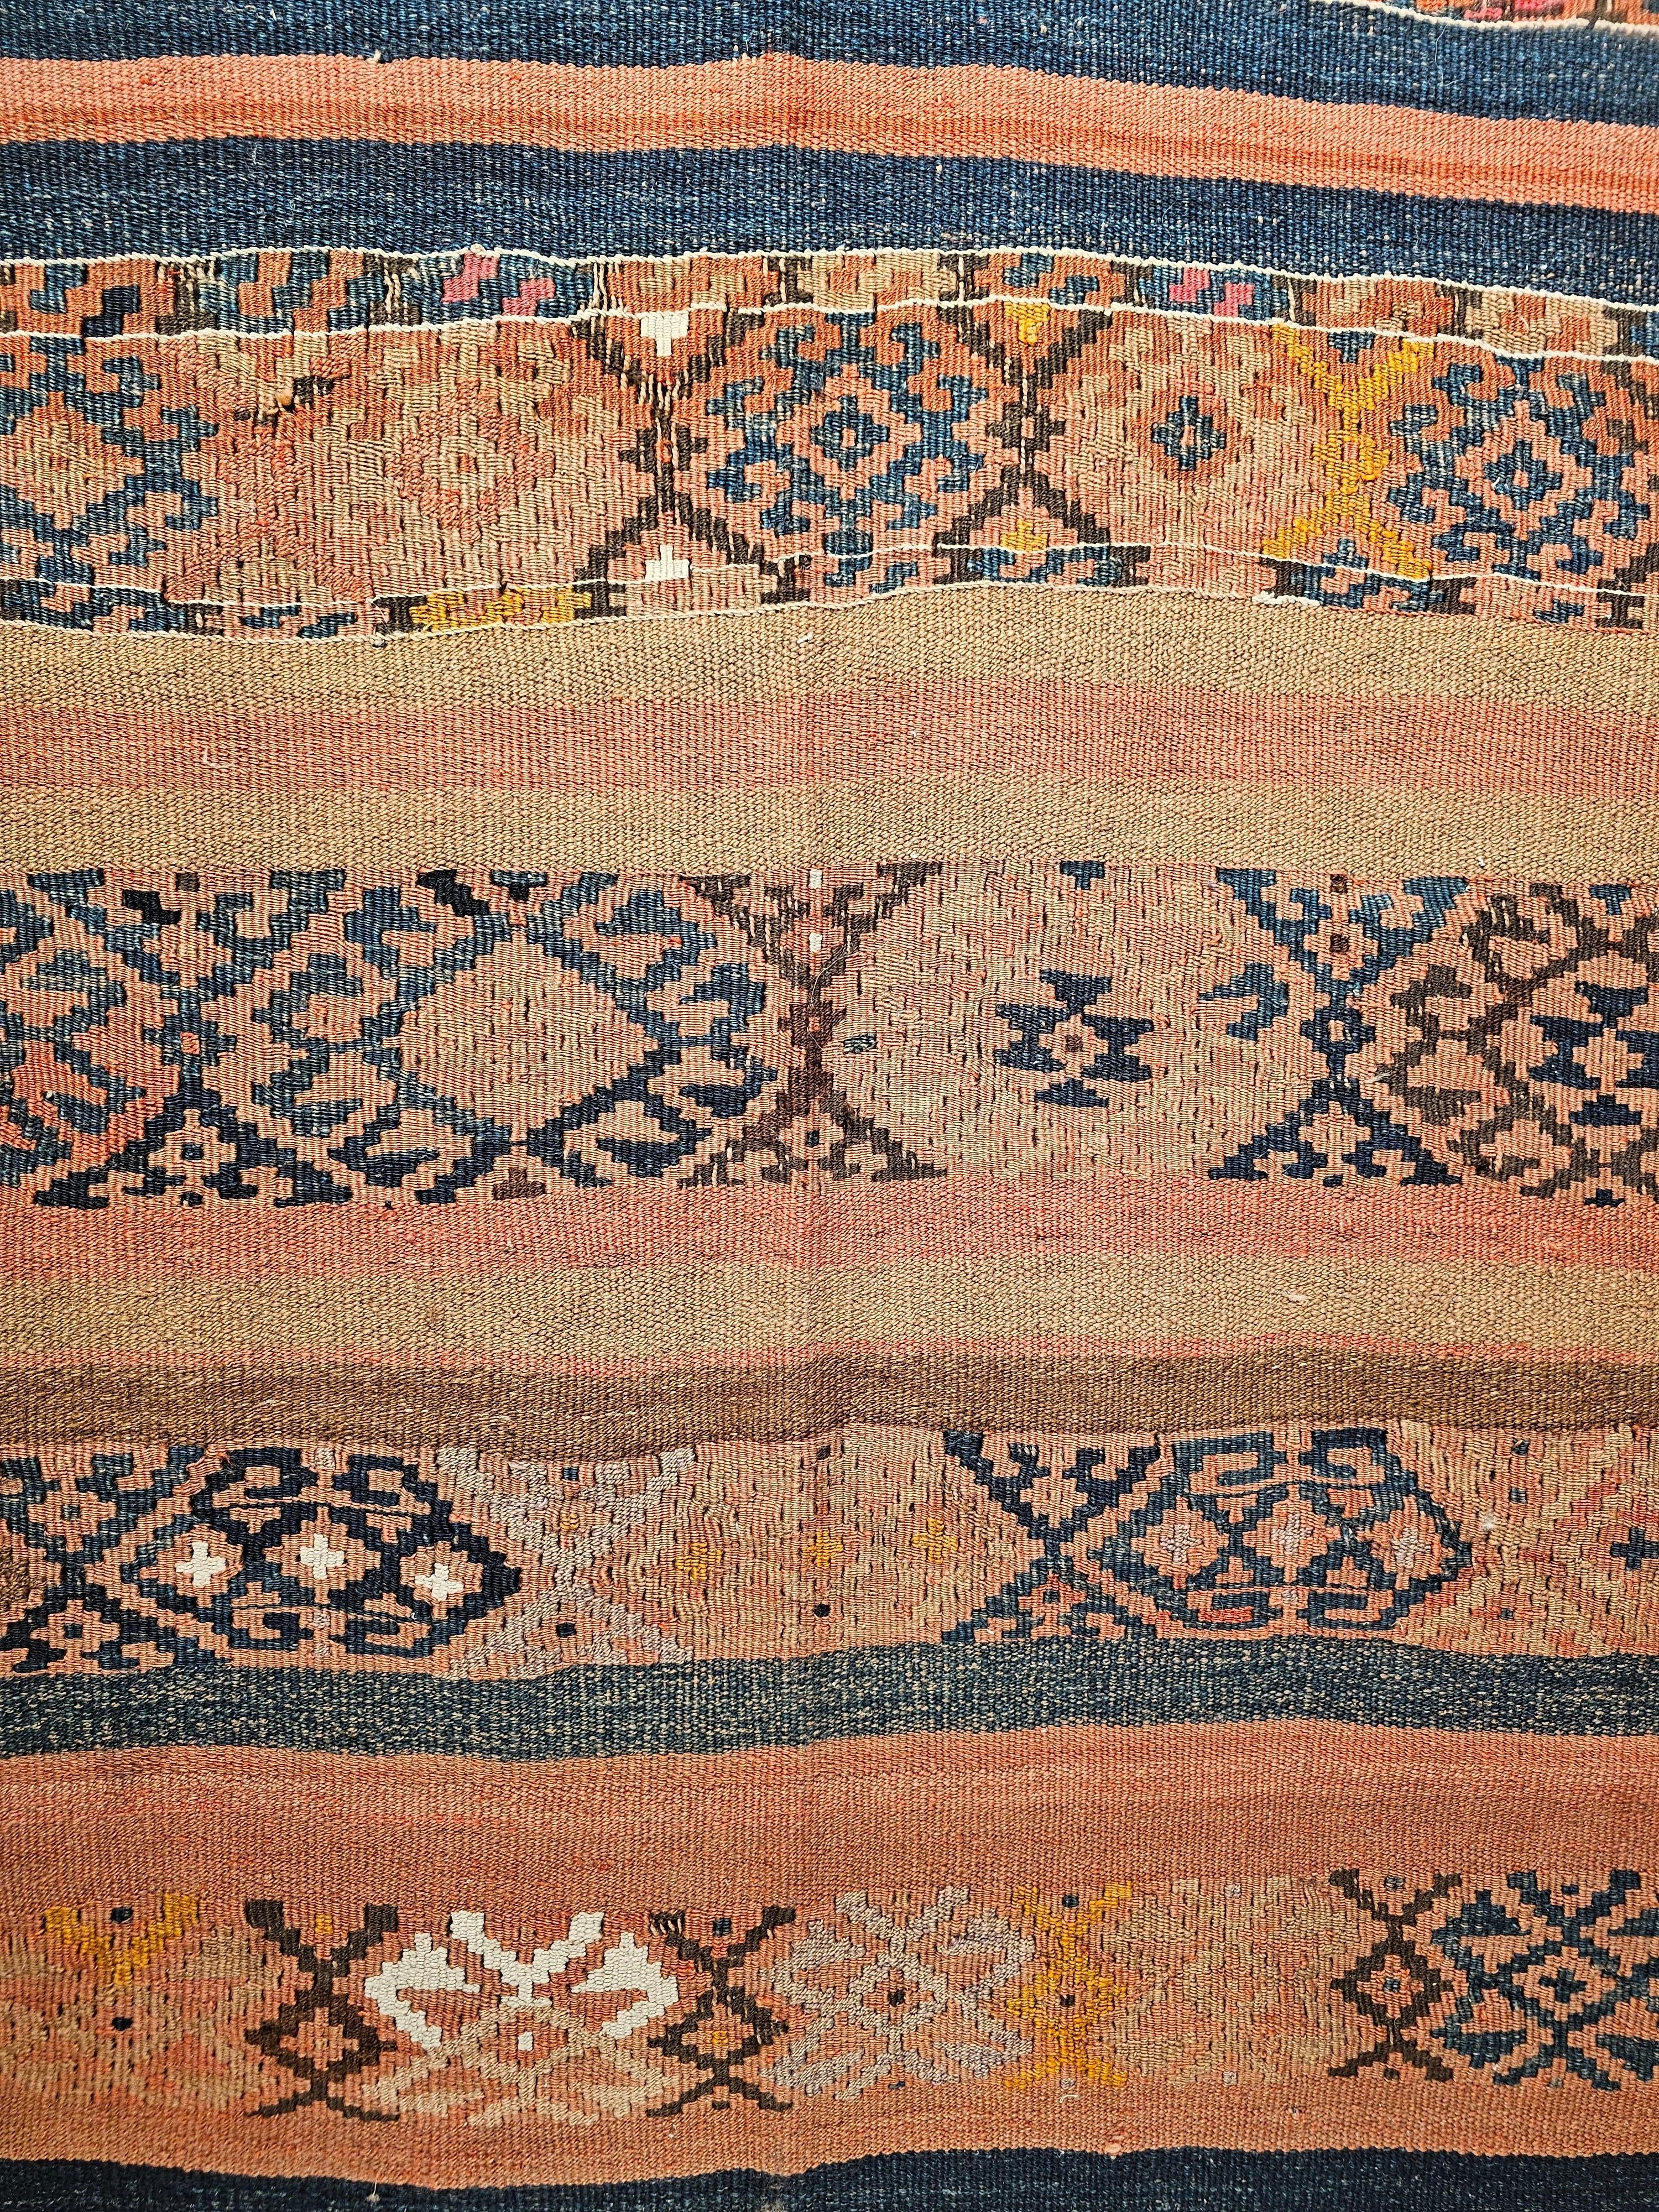 Wool Vintage Caucasian Kilim in Geometric Design in Earth Tone Colors